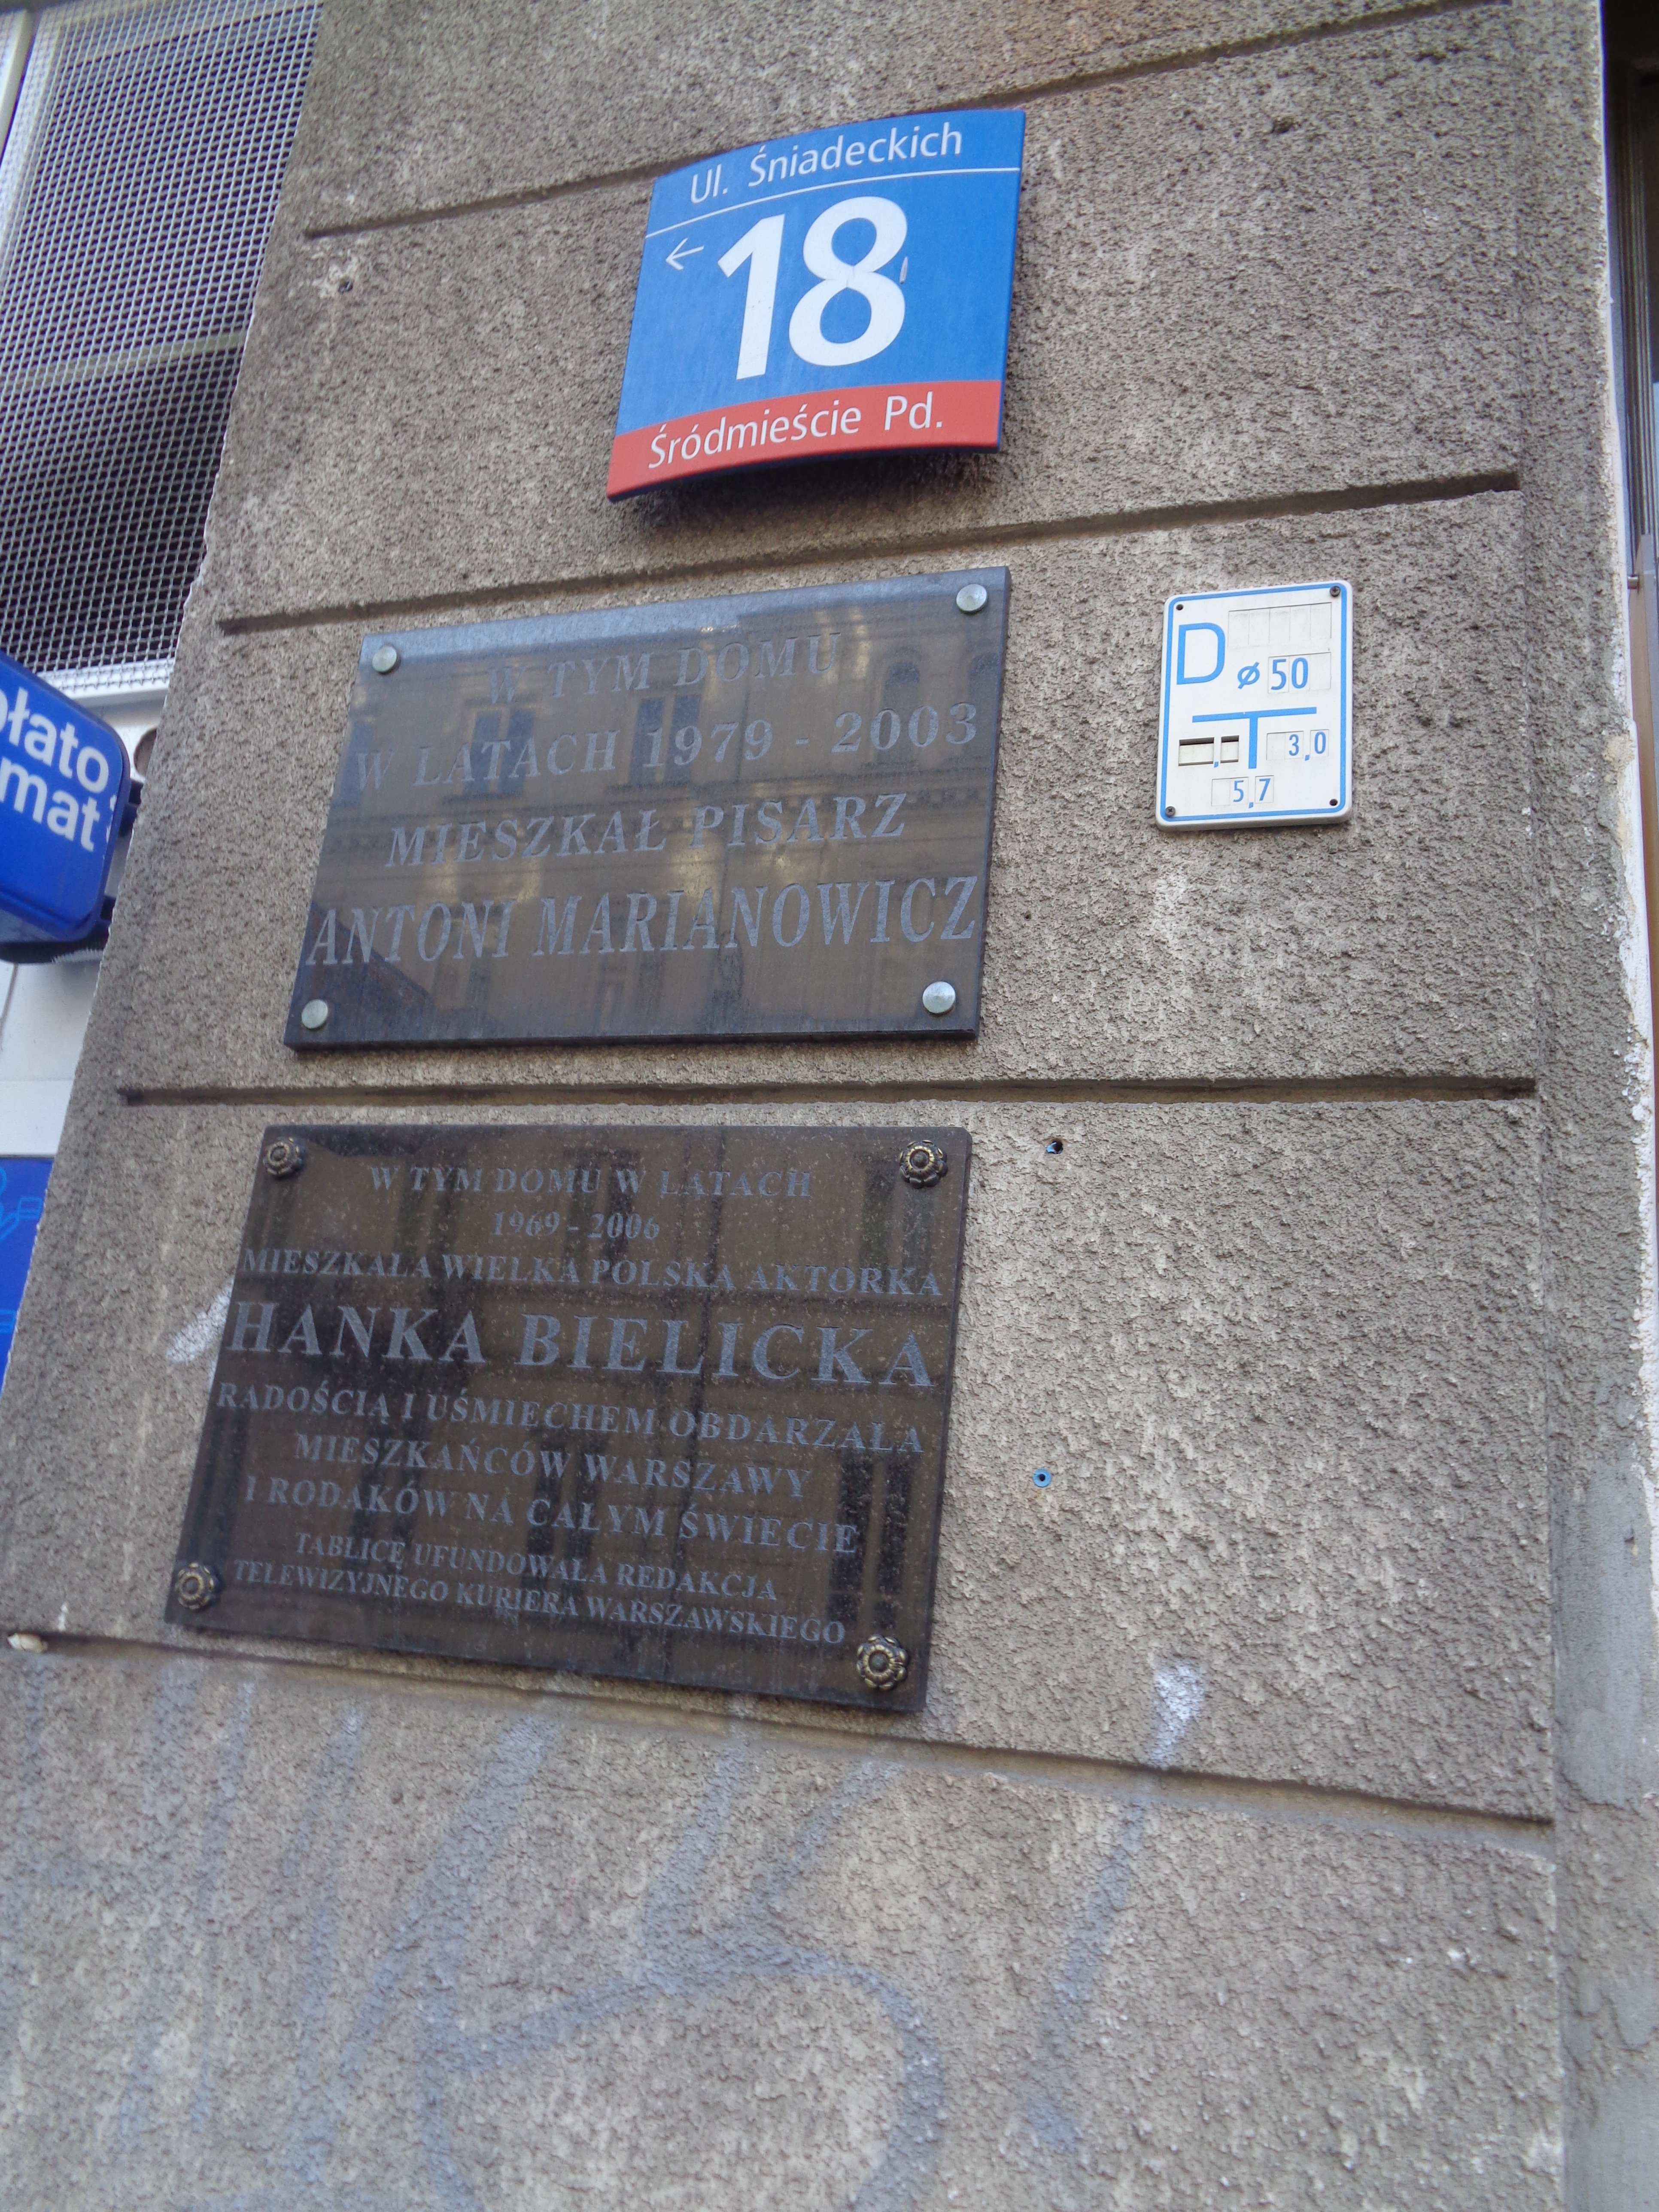 Wikipedia, 18 (house number), Hanka Bielicka, Here-lived plaques in Warsaw, House numbers in Warsaw 